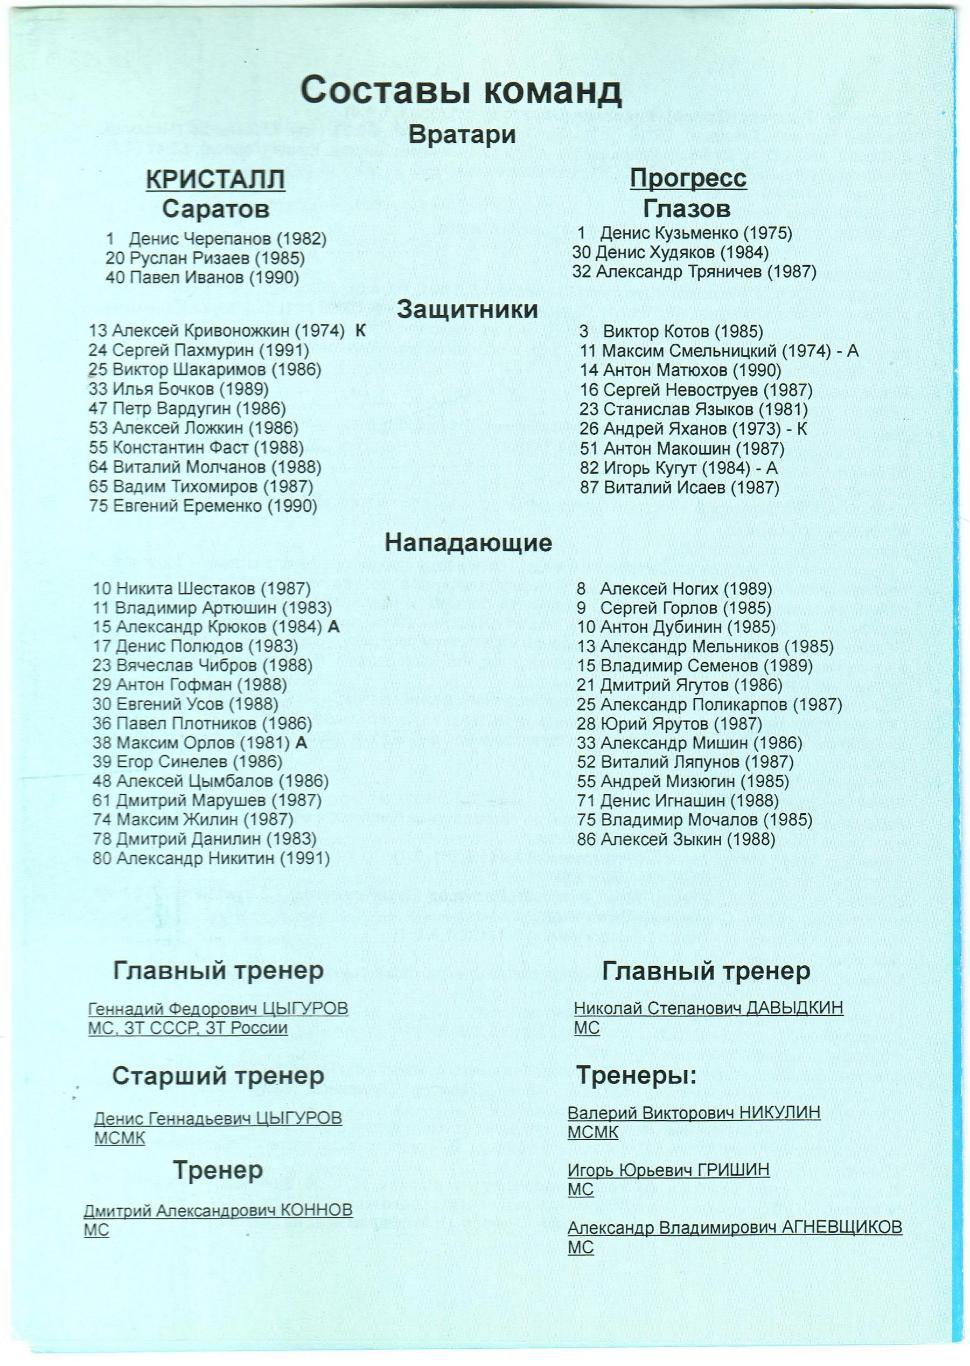 Кристалл Саратов – Прогресс Глазов 09-10.02.2010 1